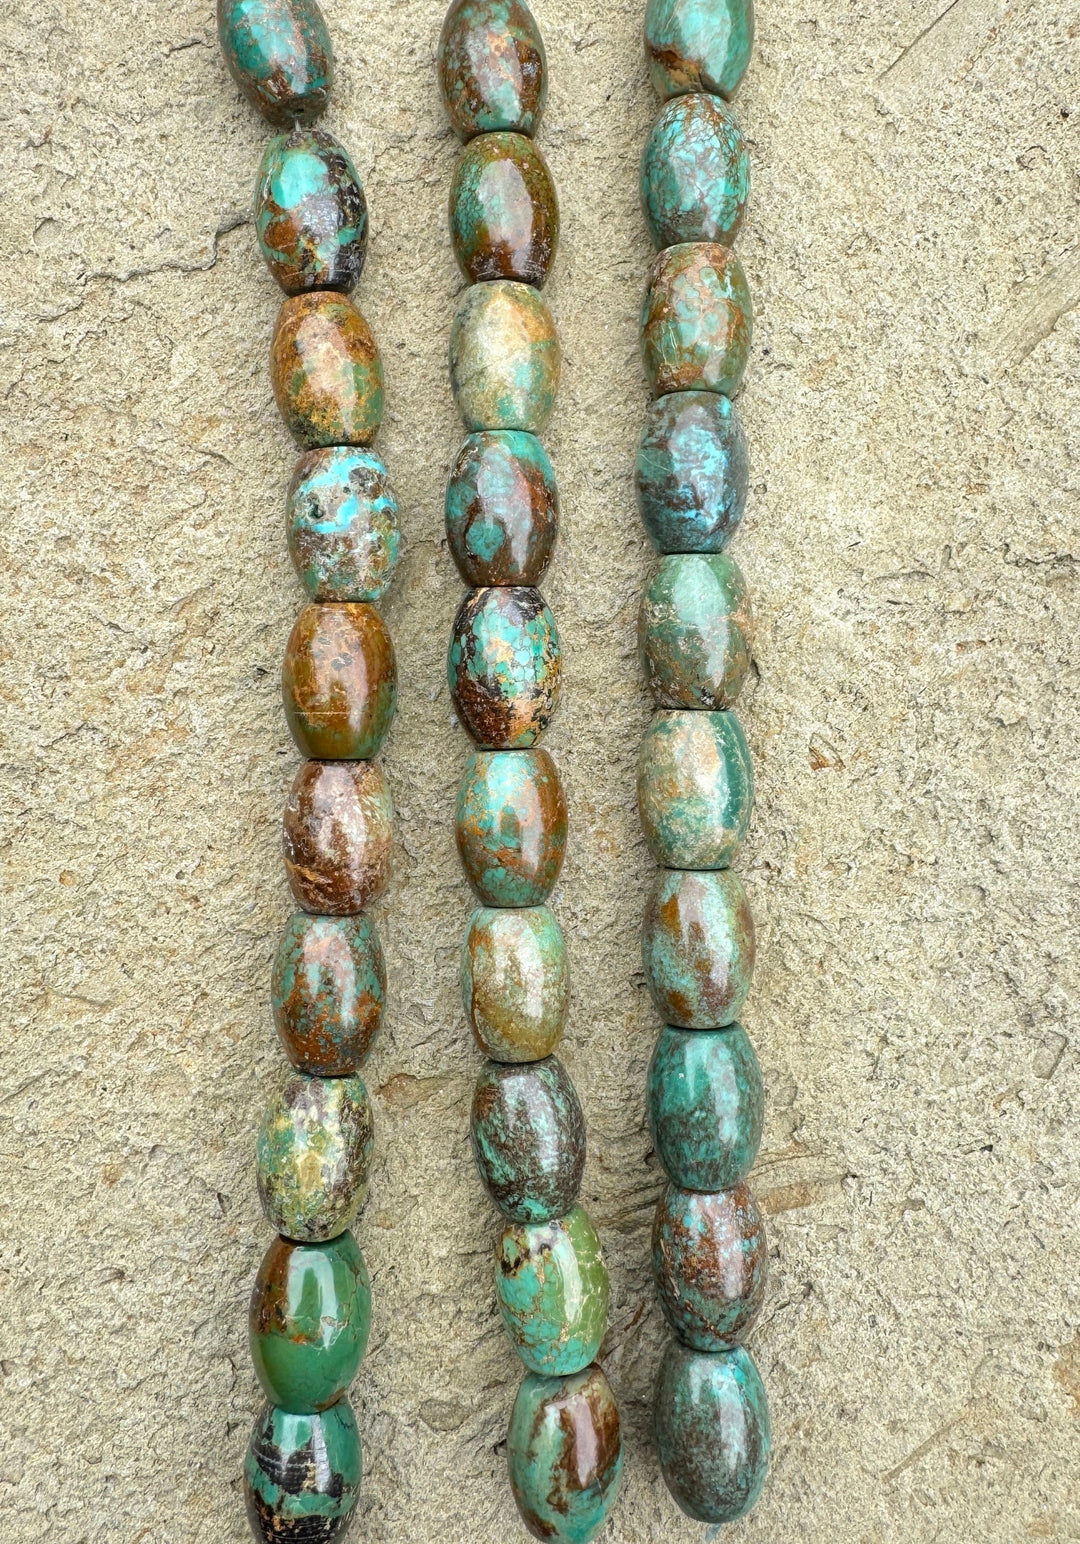 Hubei Turquoise (China) BIG 15x25mm Barrel Shaped Beads (8